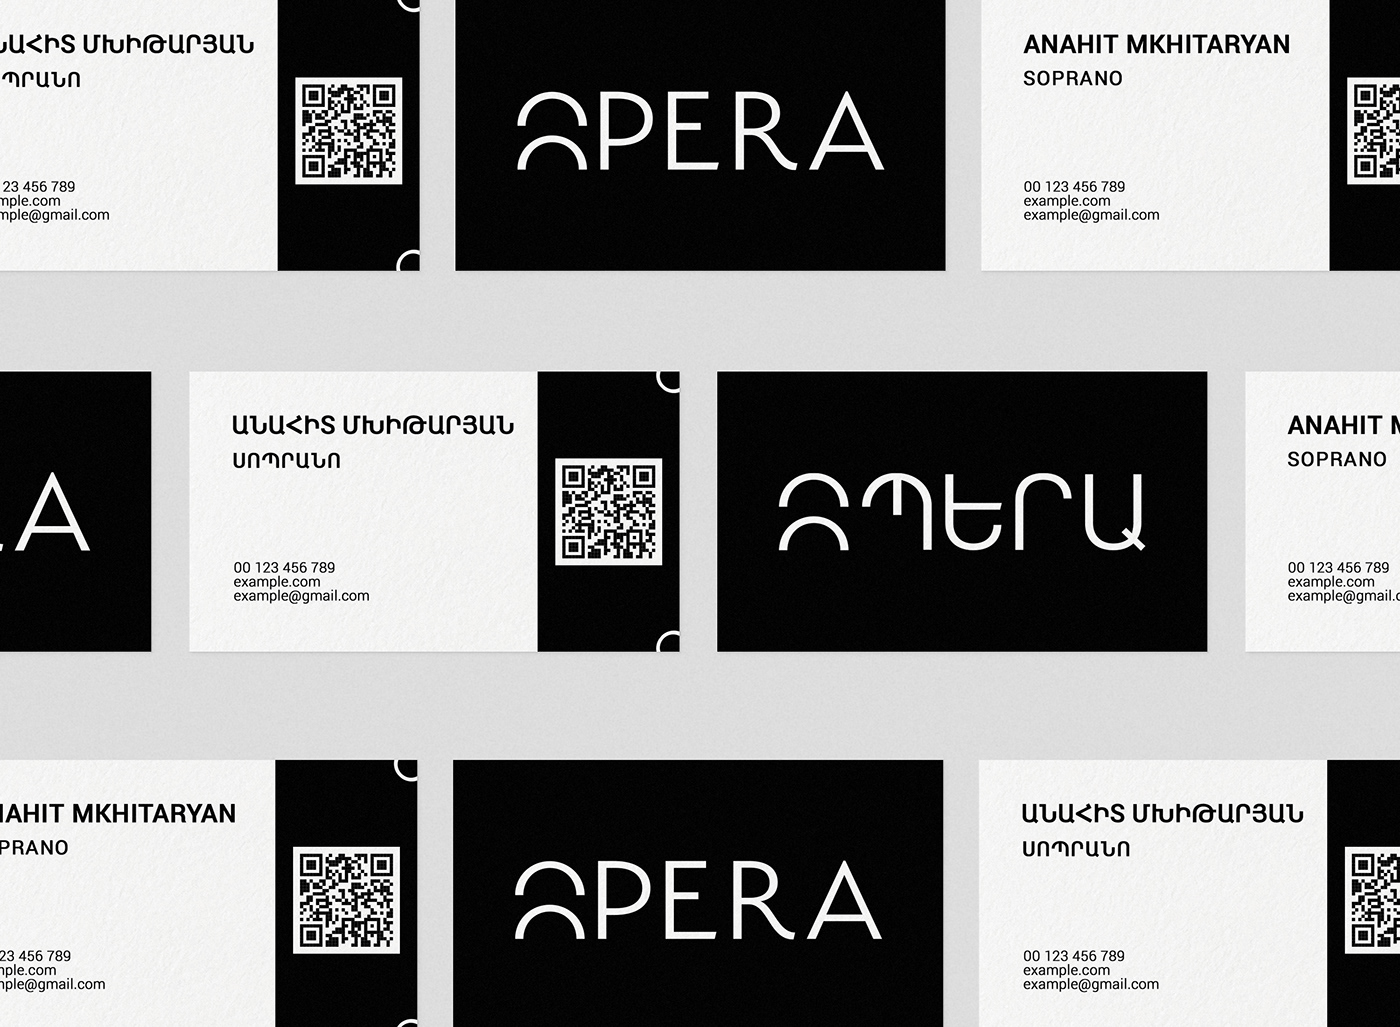 astghik hakobyan ballet logo music opera orchestra rebranding redesign business card poster